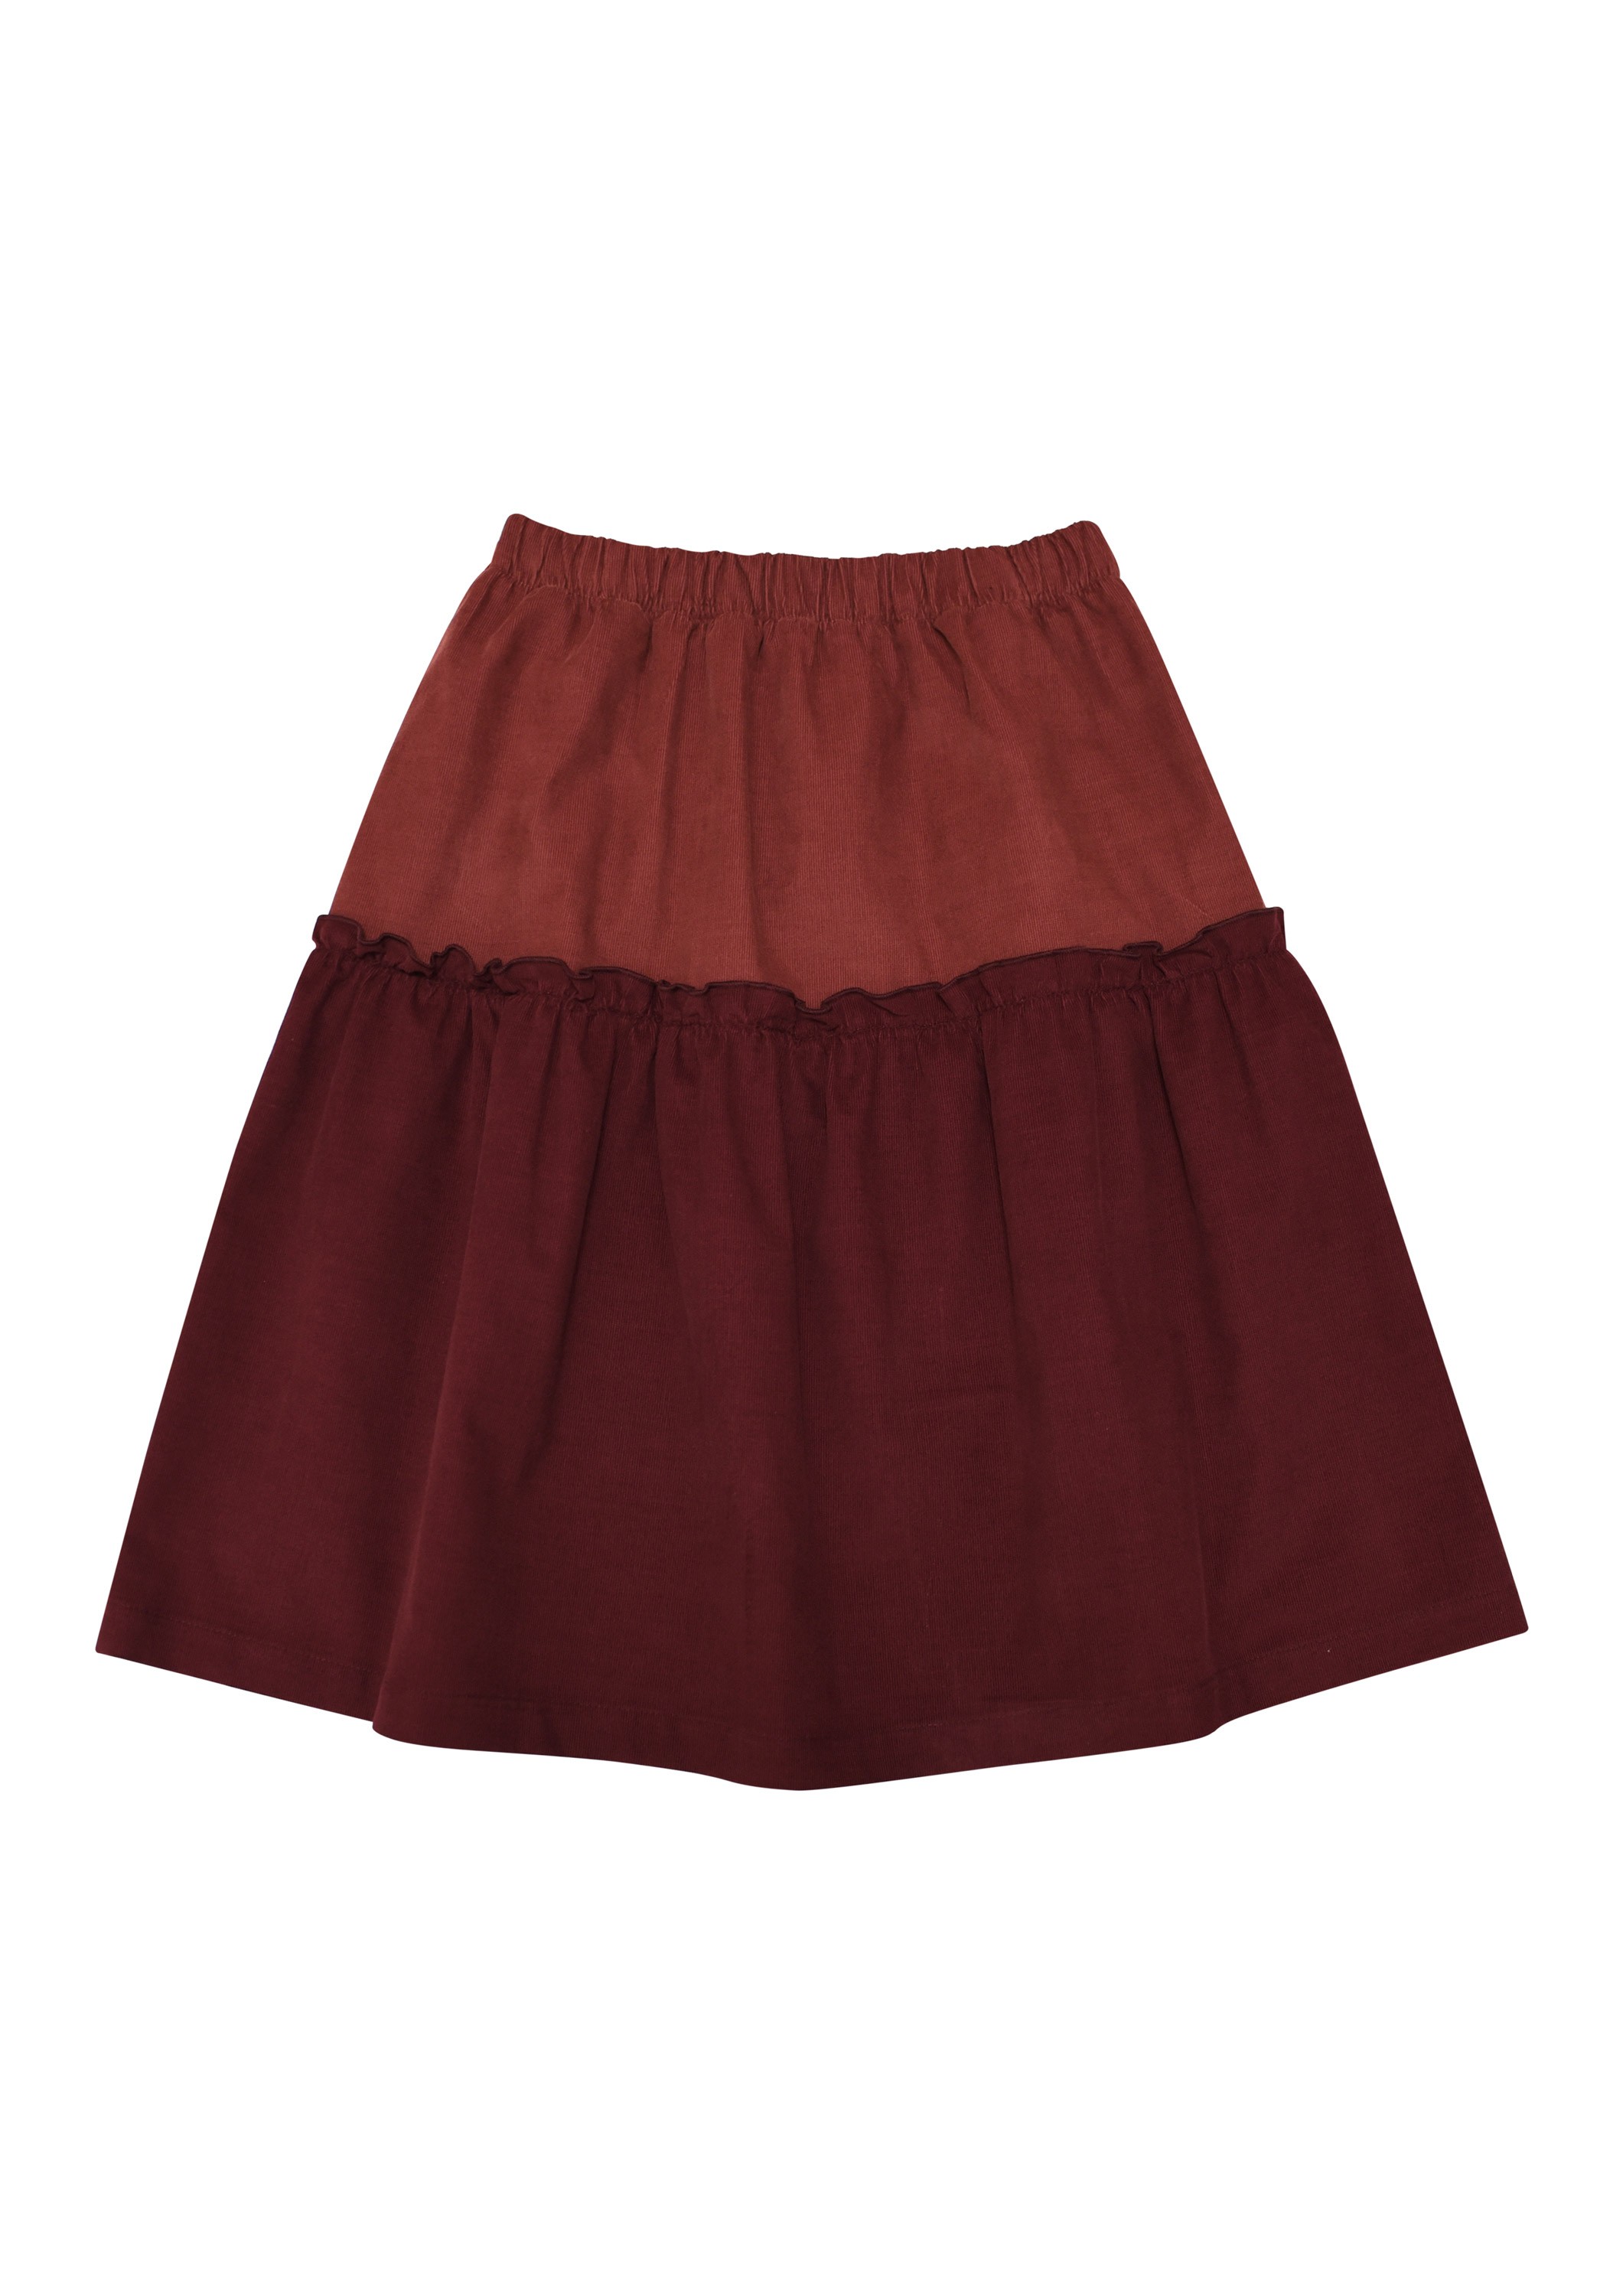 Curduroy skirt bordo | HEBE